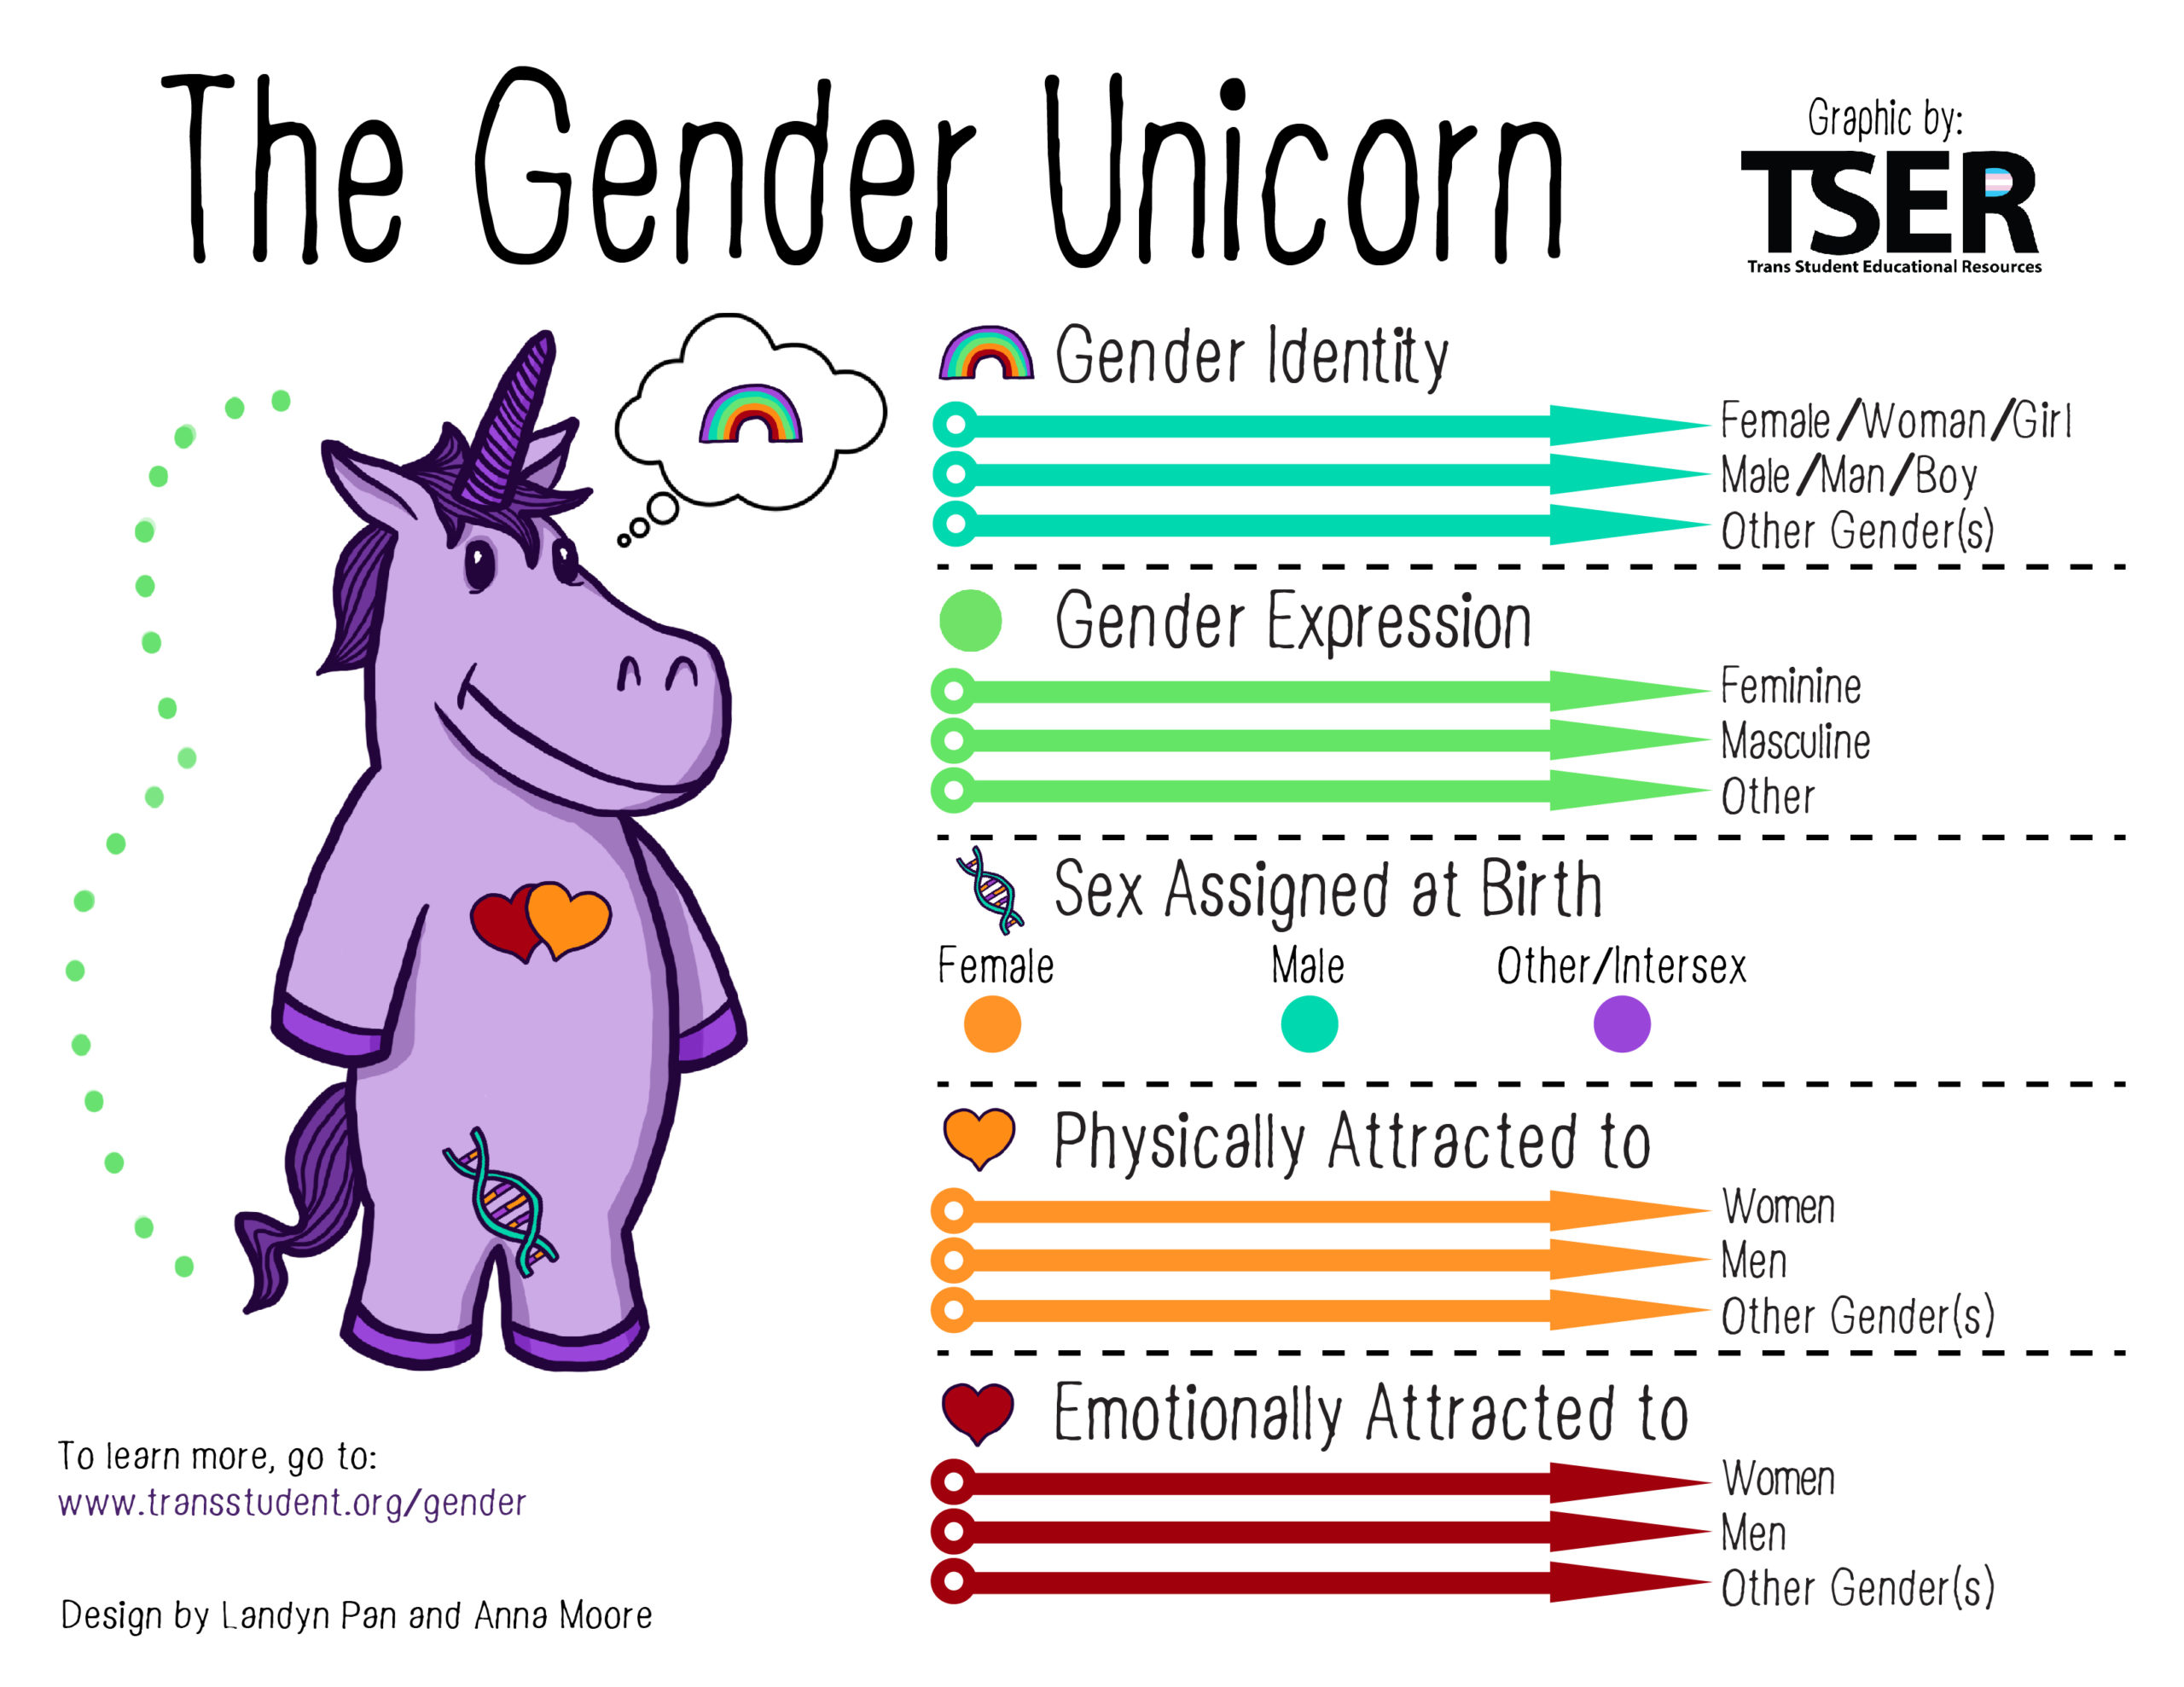 The Gender unicorn. Image description linked in caption.